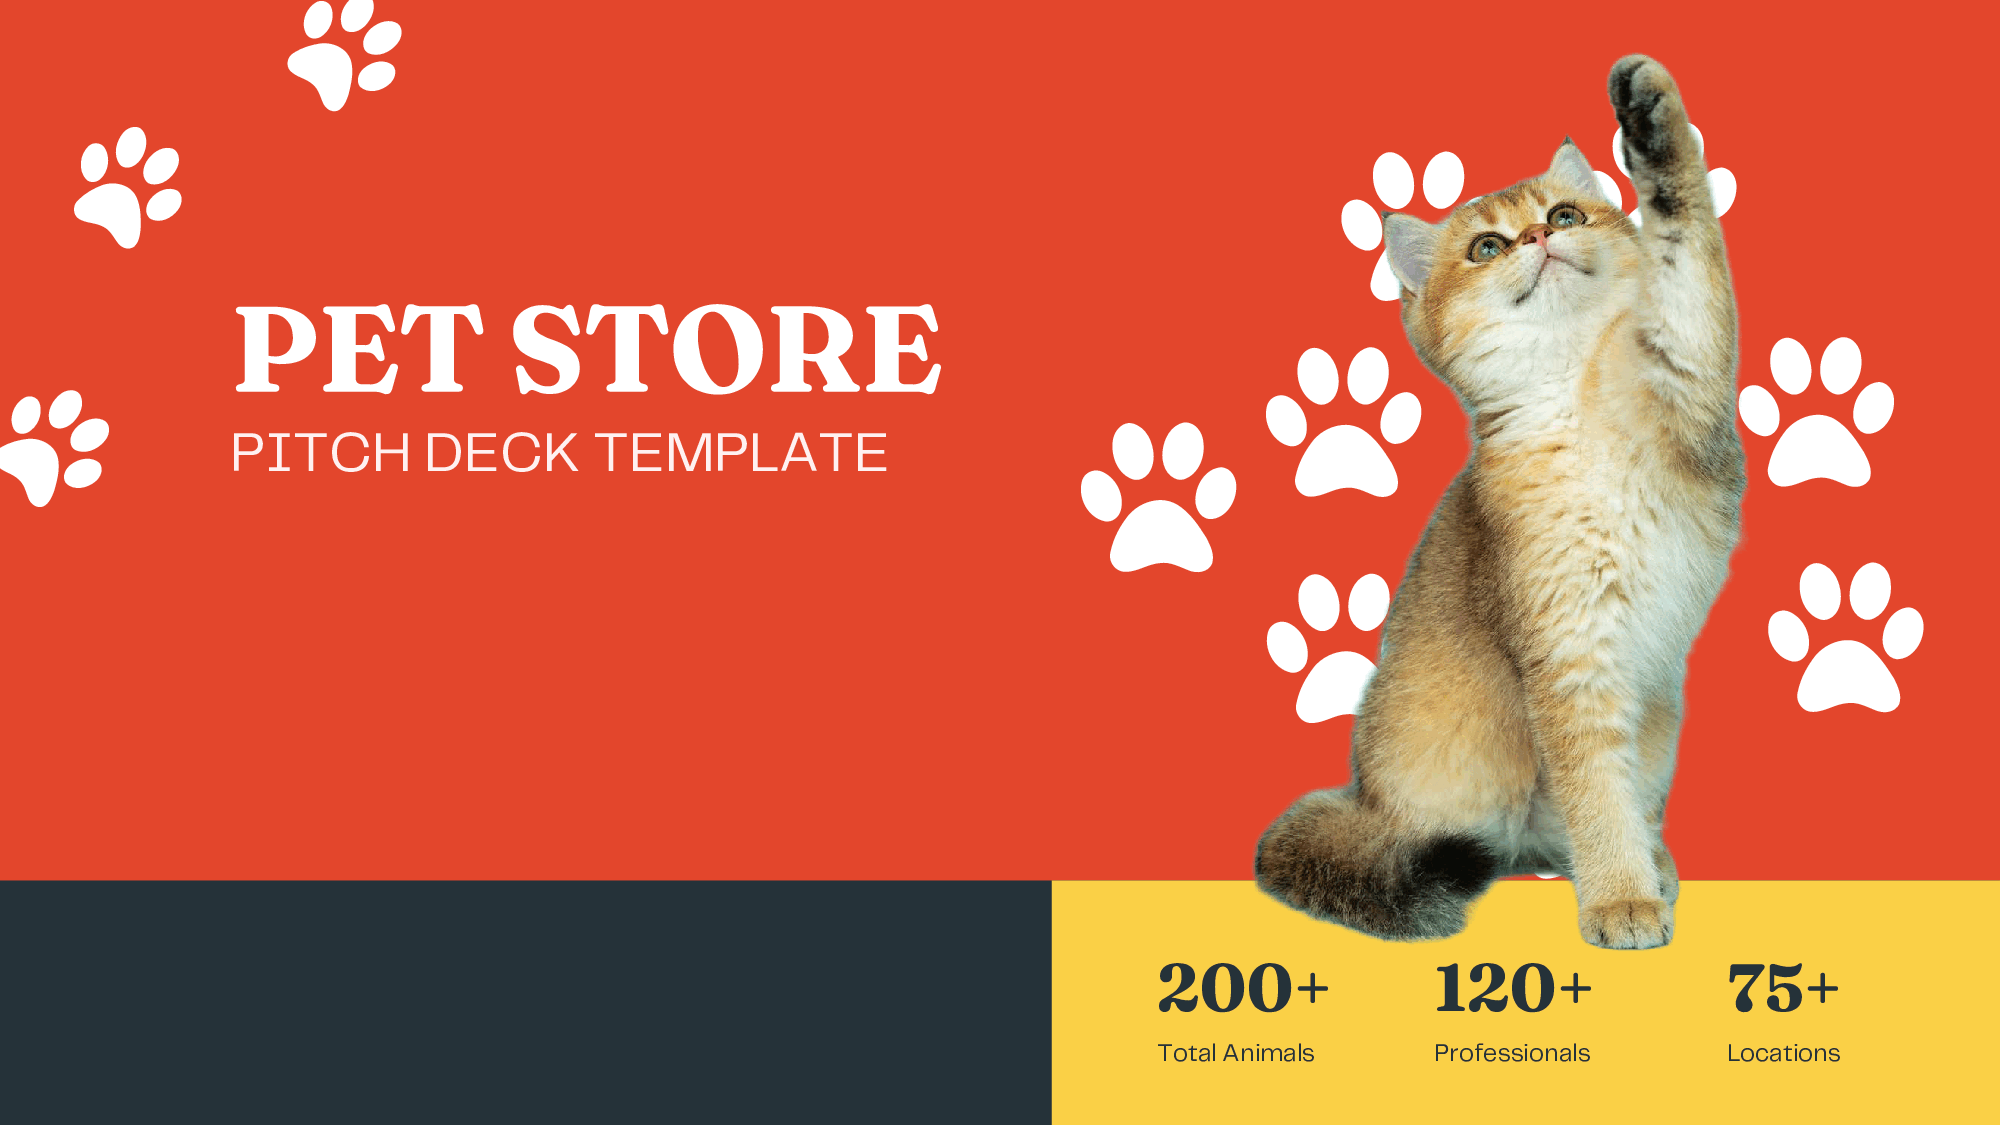 Online Pet Store Pitch Deck